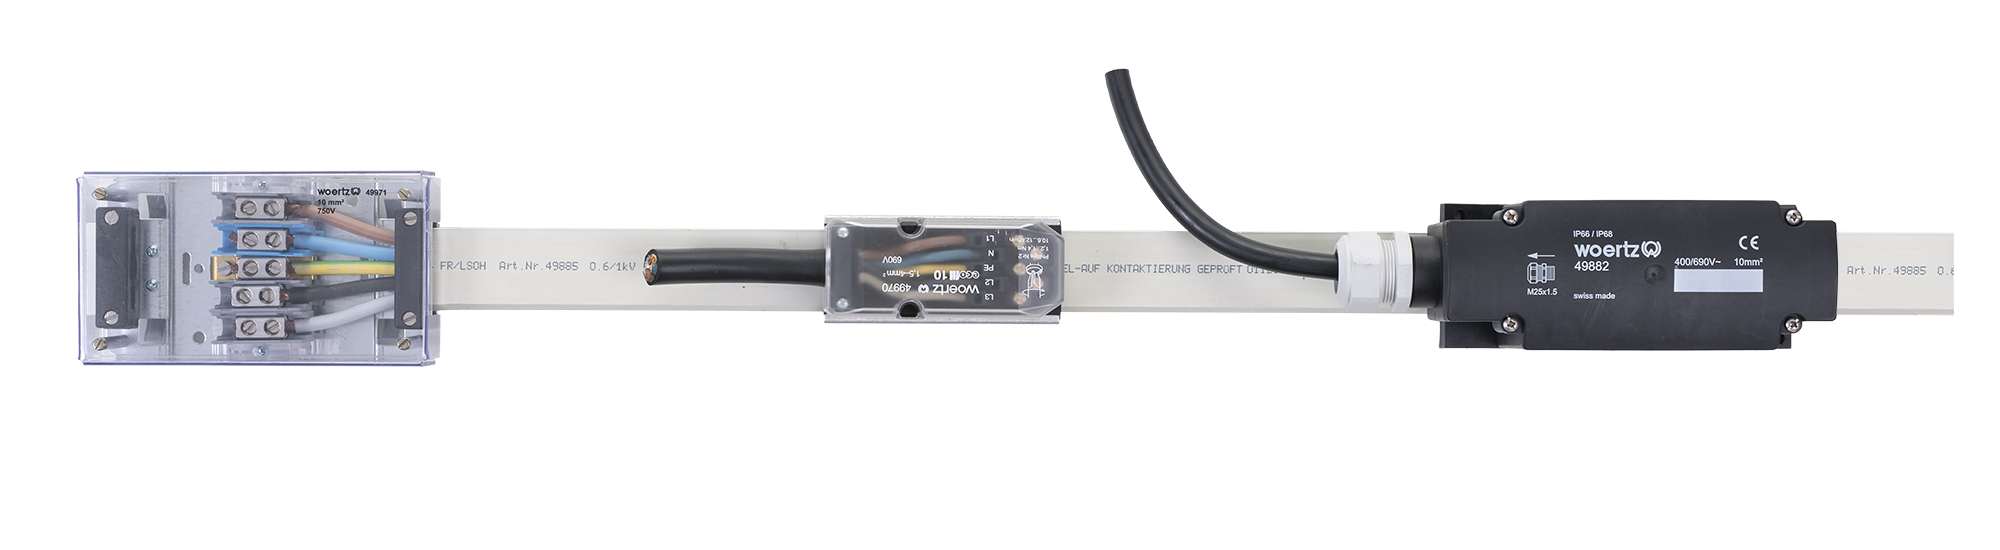 Sistema de cable plano Power 5G10 mm²